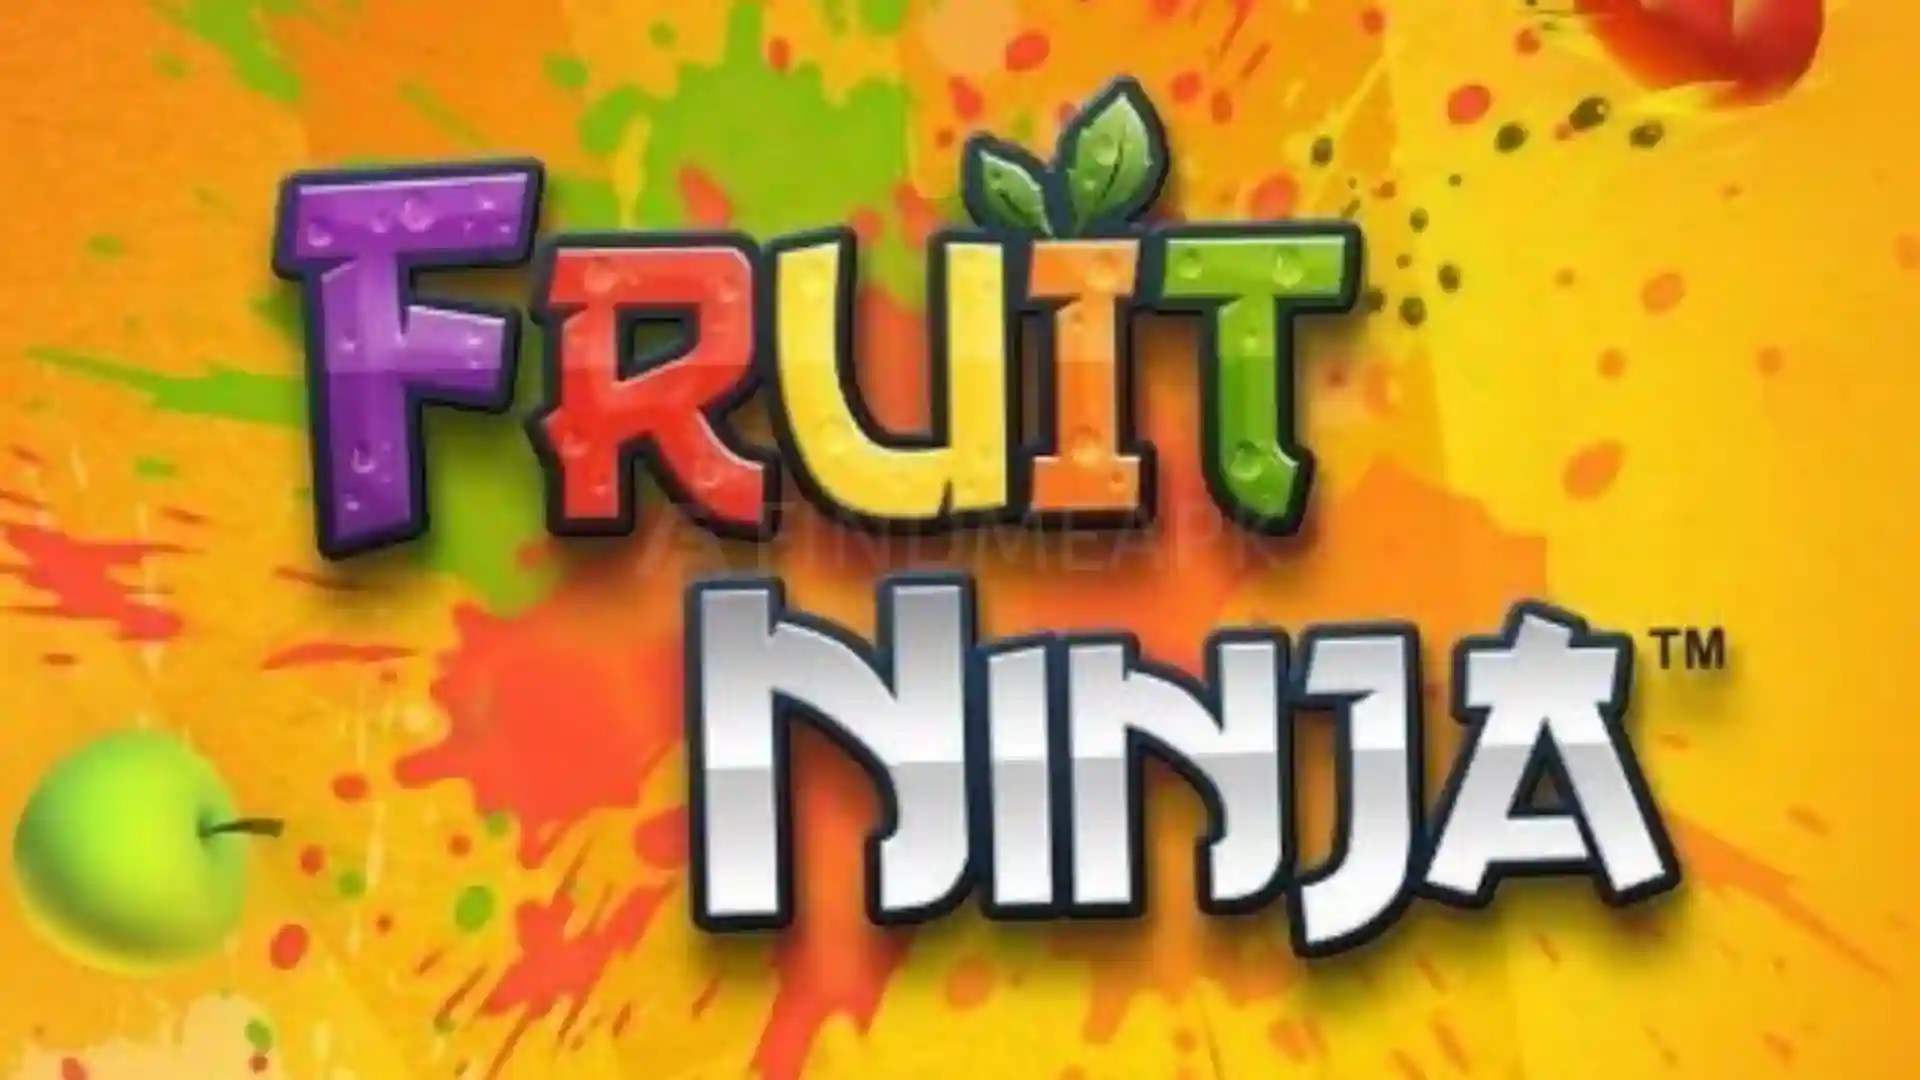 Fruit Ninja MOD APK v3.45.0 (Unlimited Money) Free Download For Android 